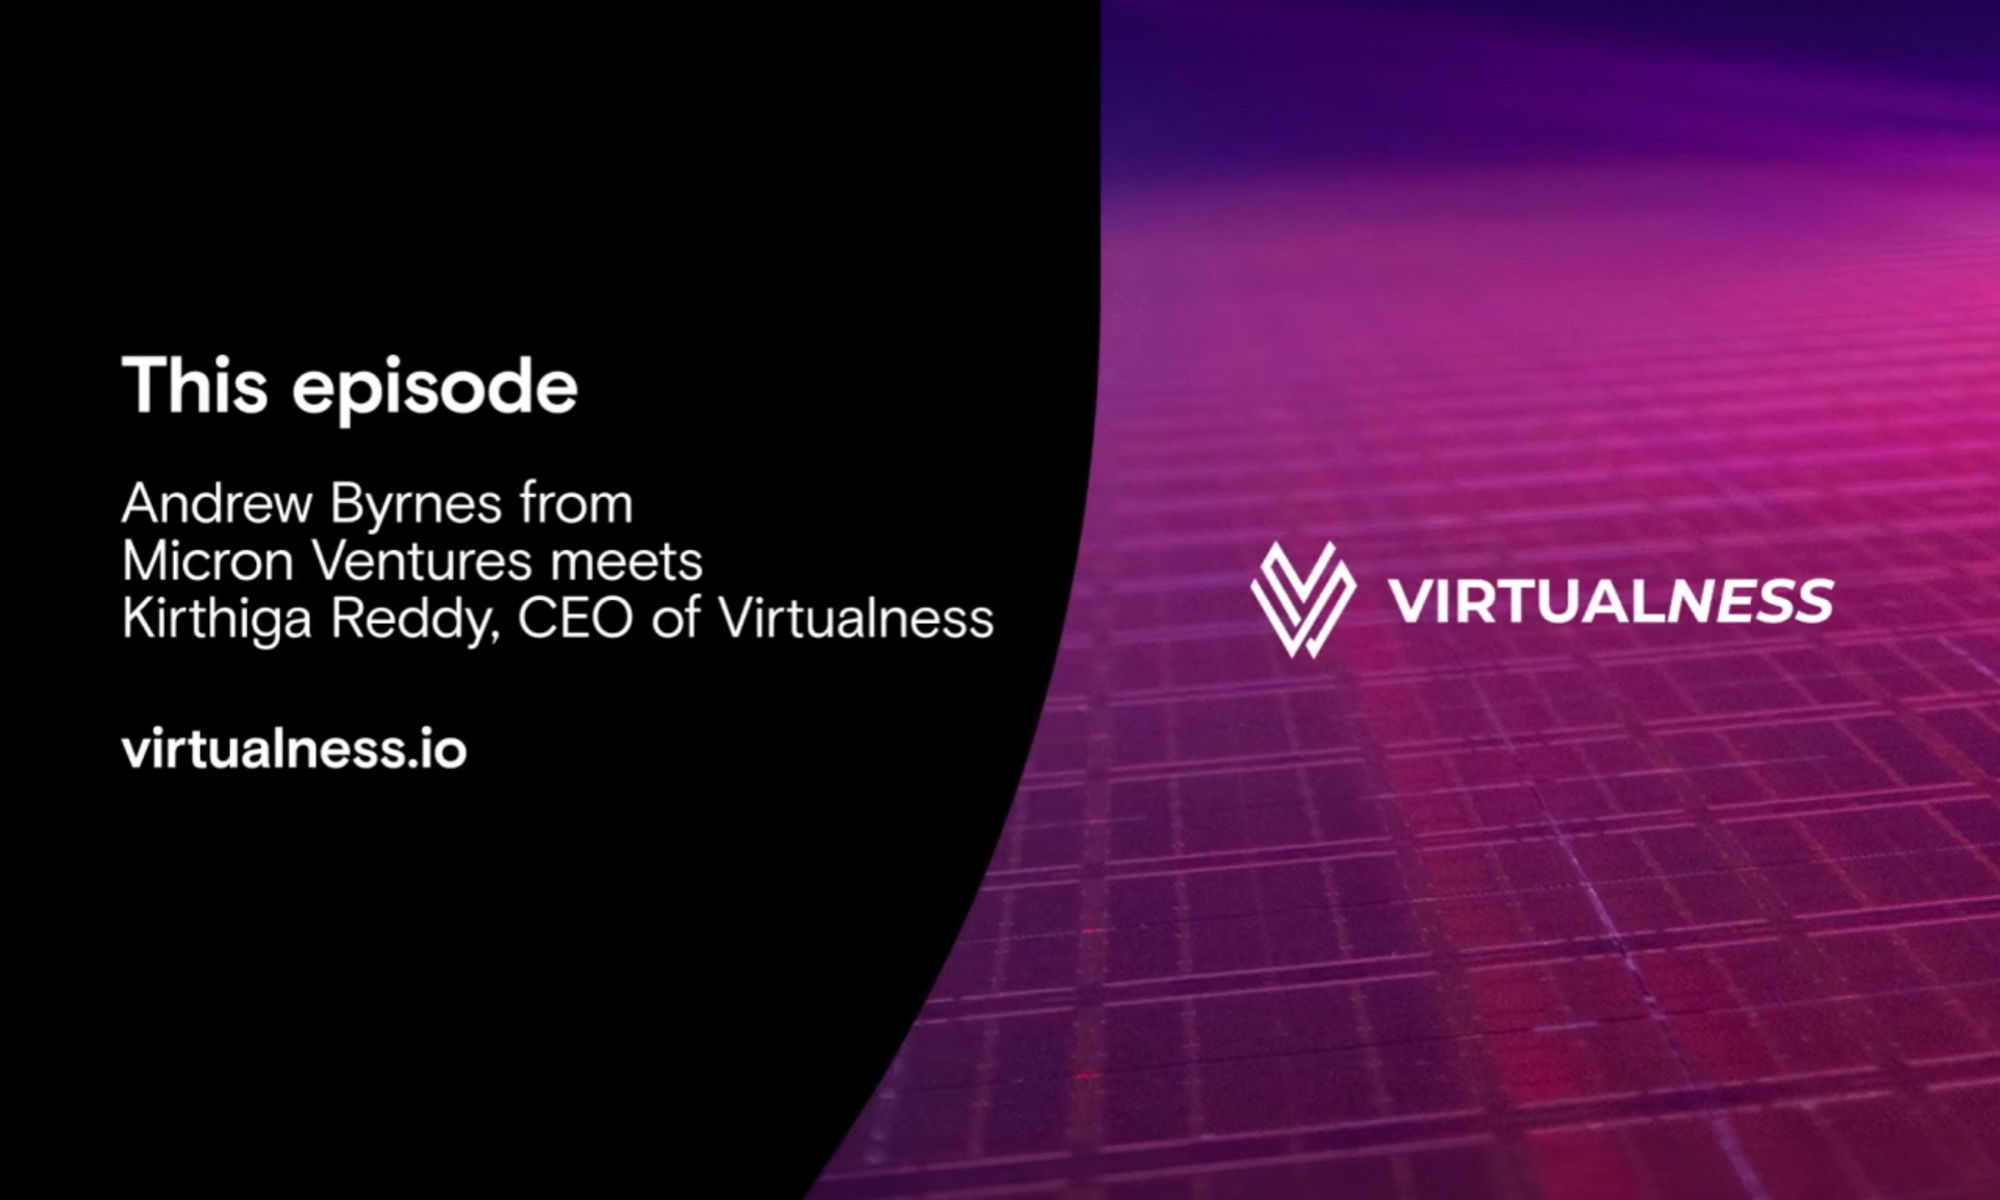 Virtualnessの創業者を紹介する5分間動画